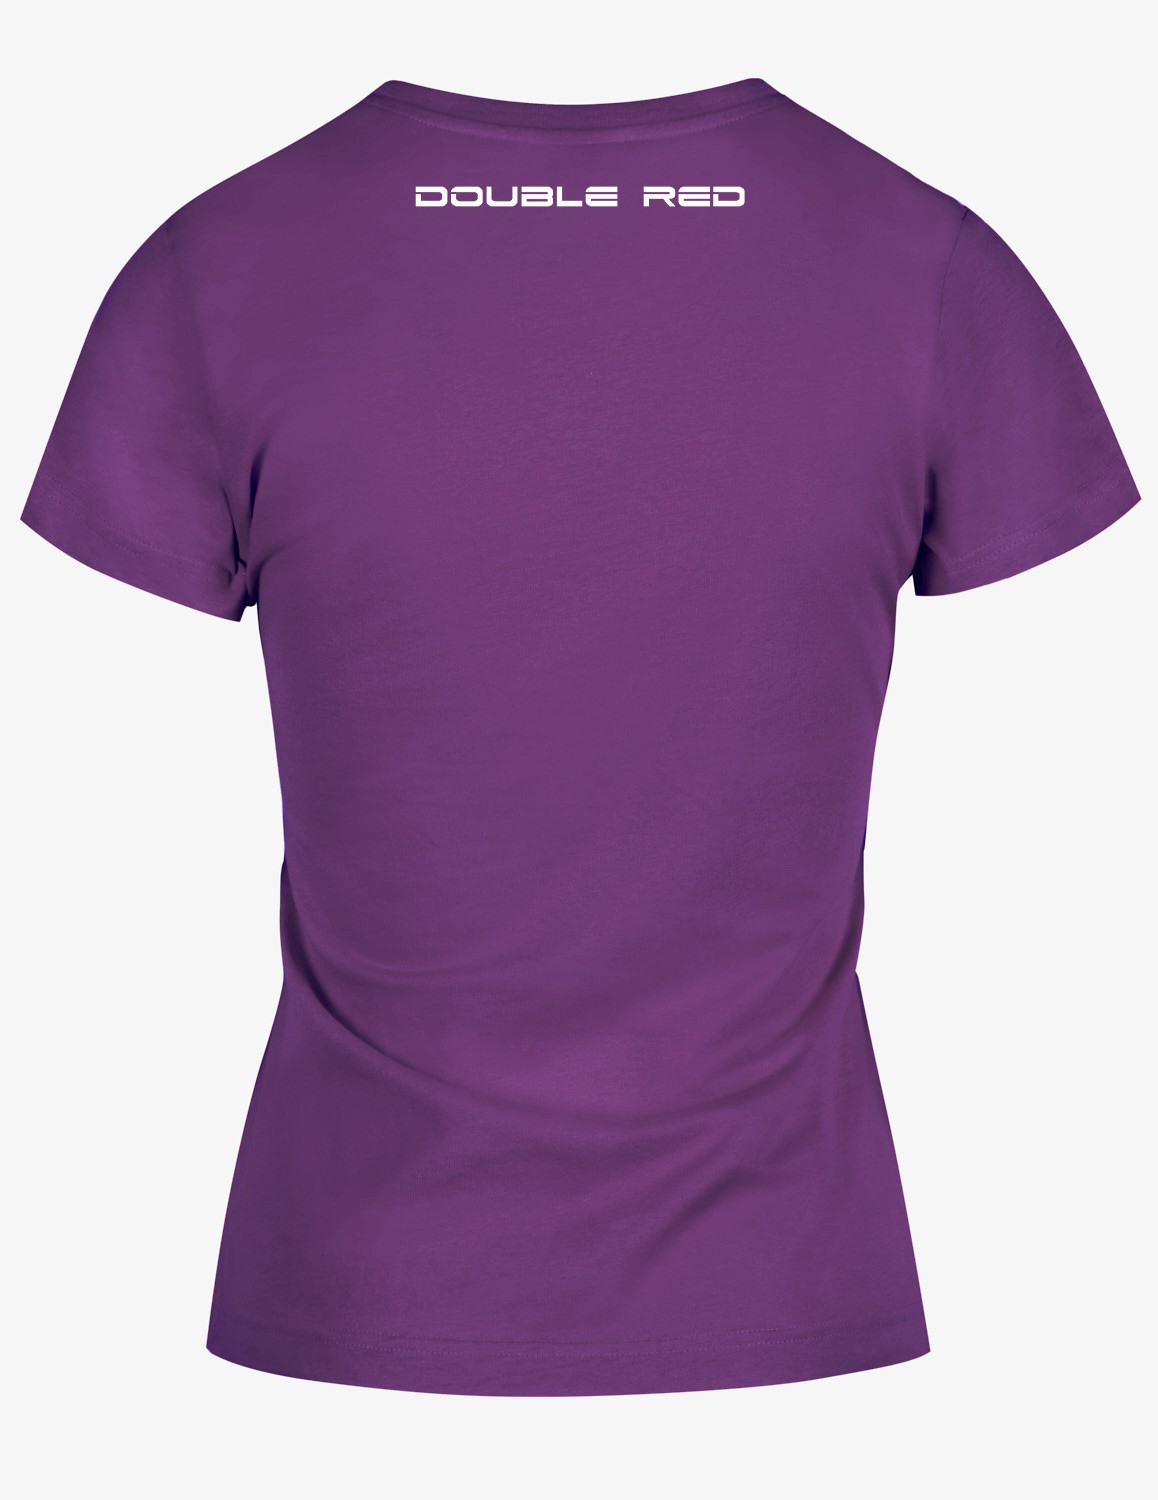 CARBONARO™ T-shirt Purple